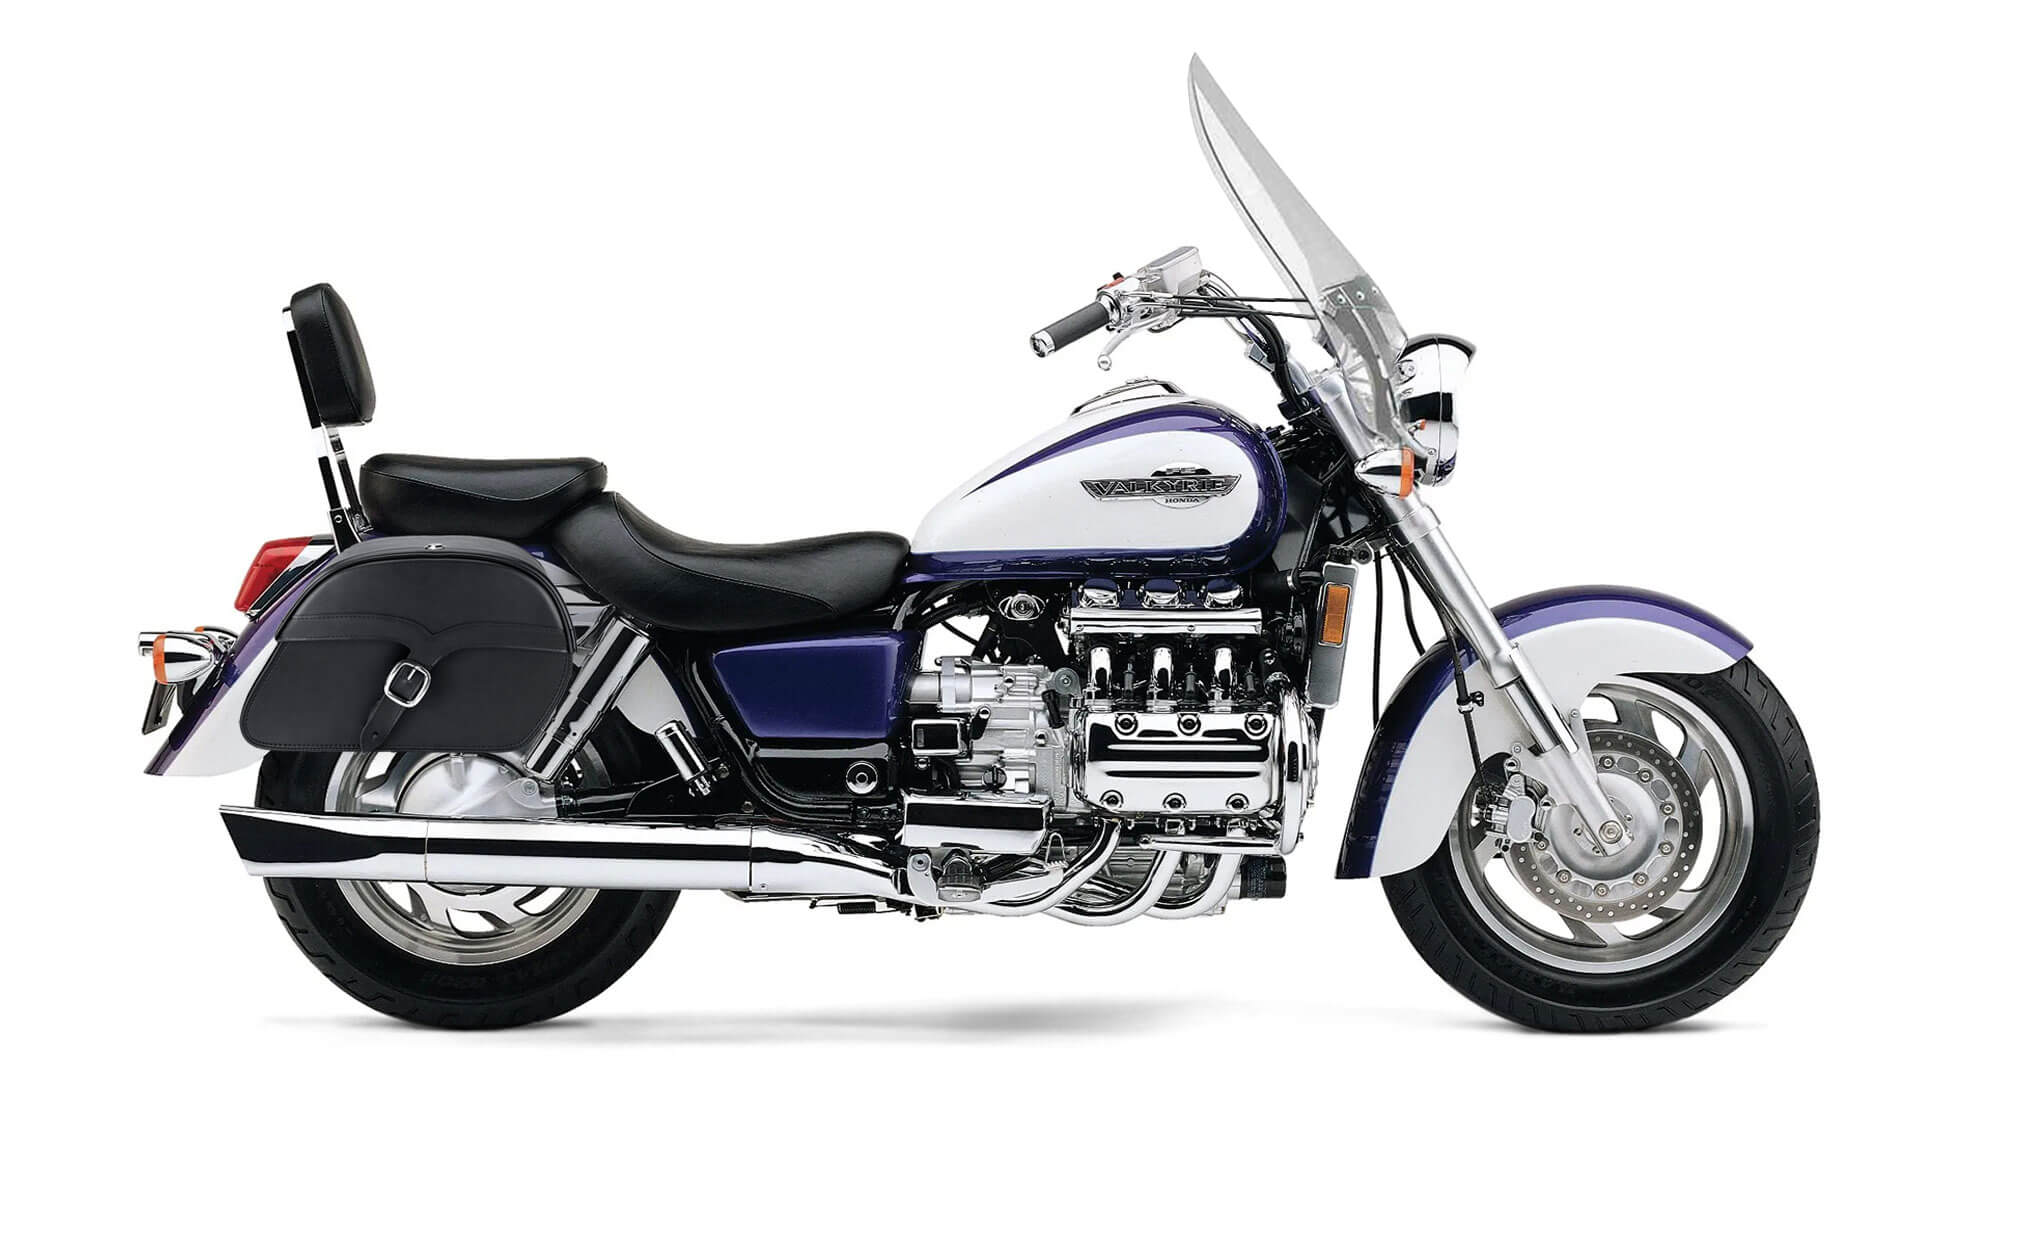 Viking Vintage Large Honda Valkyrie 1500 Tourer Shock Cut Out Leather Motorcycle Saddlebags on Bike Photo @expand